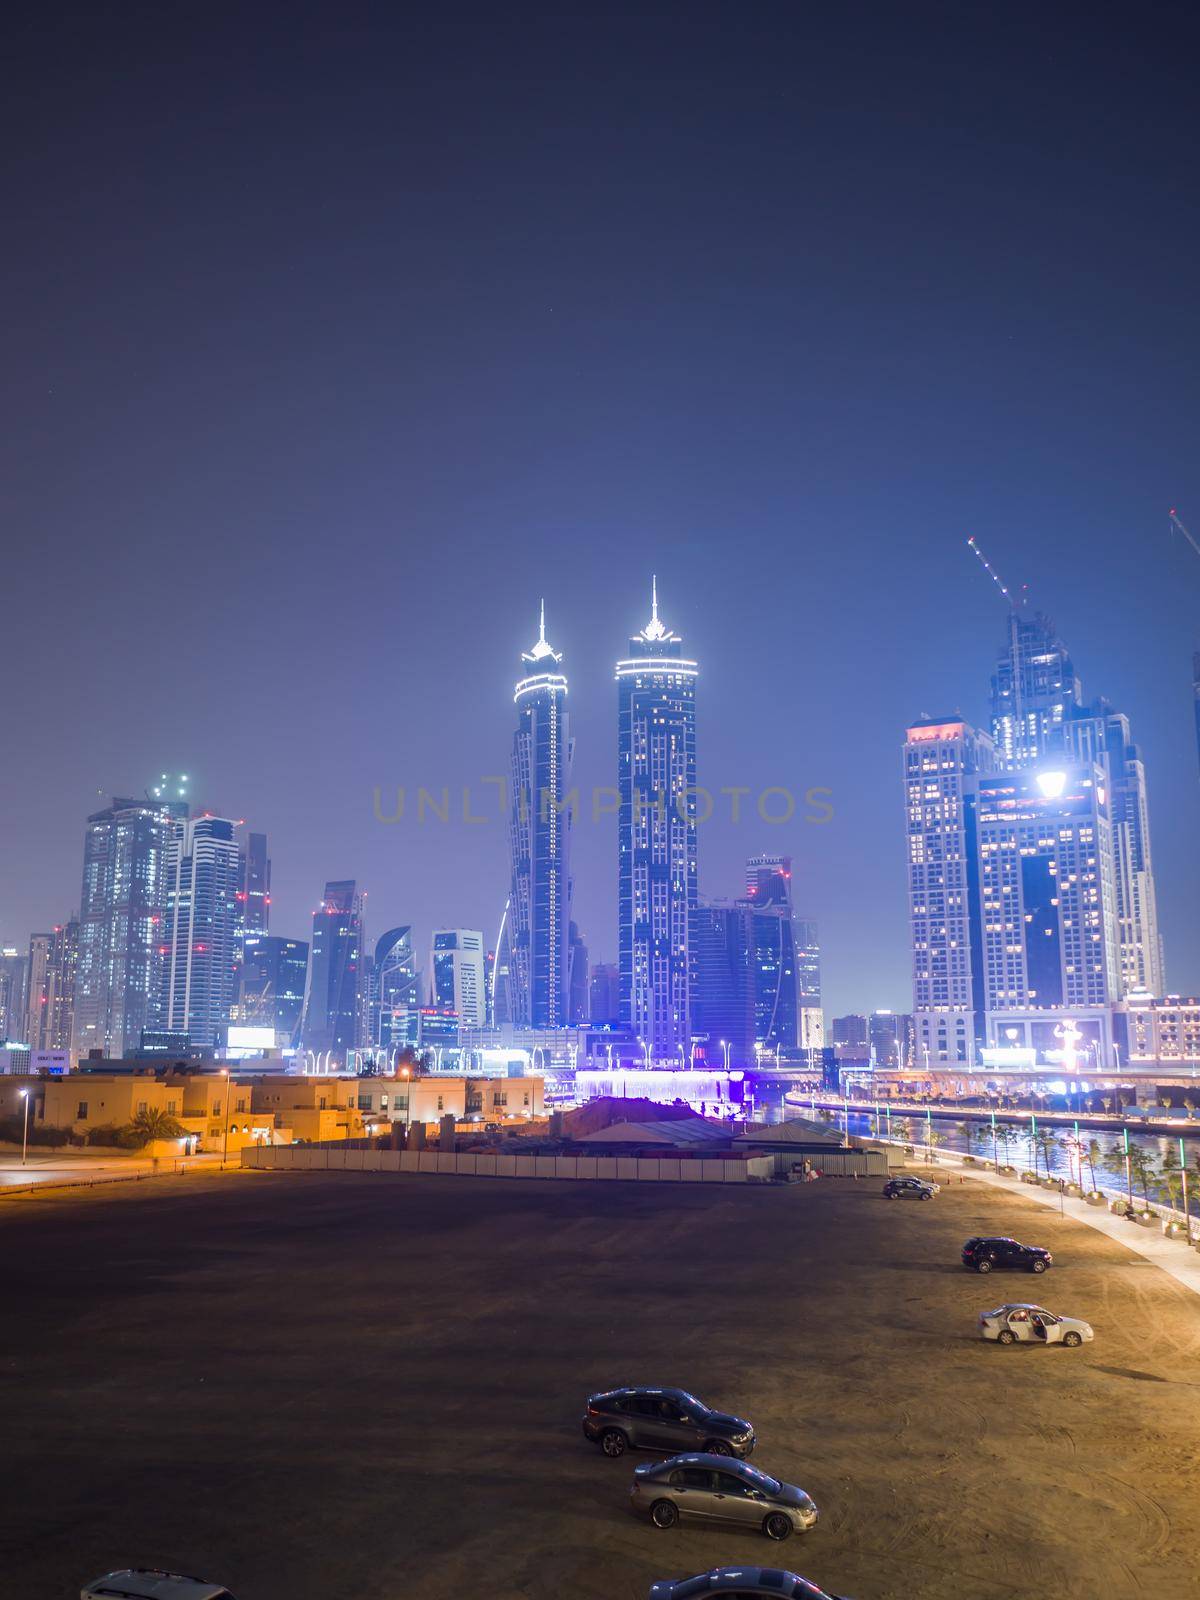 Panorama of skyscrapers of Dubai at night. View of Dubai Greek district